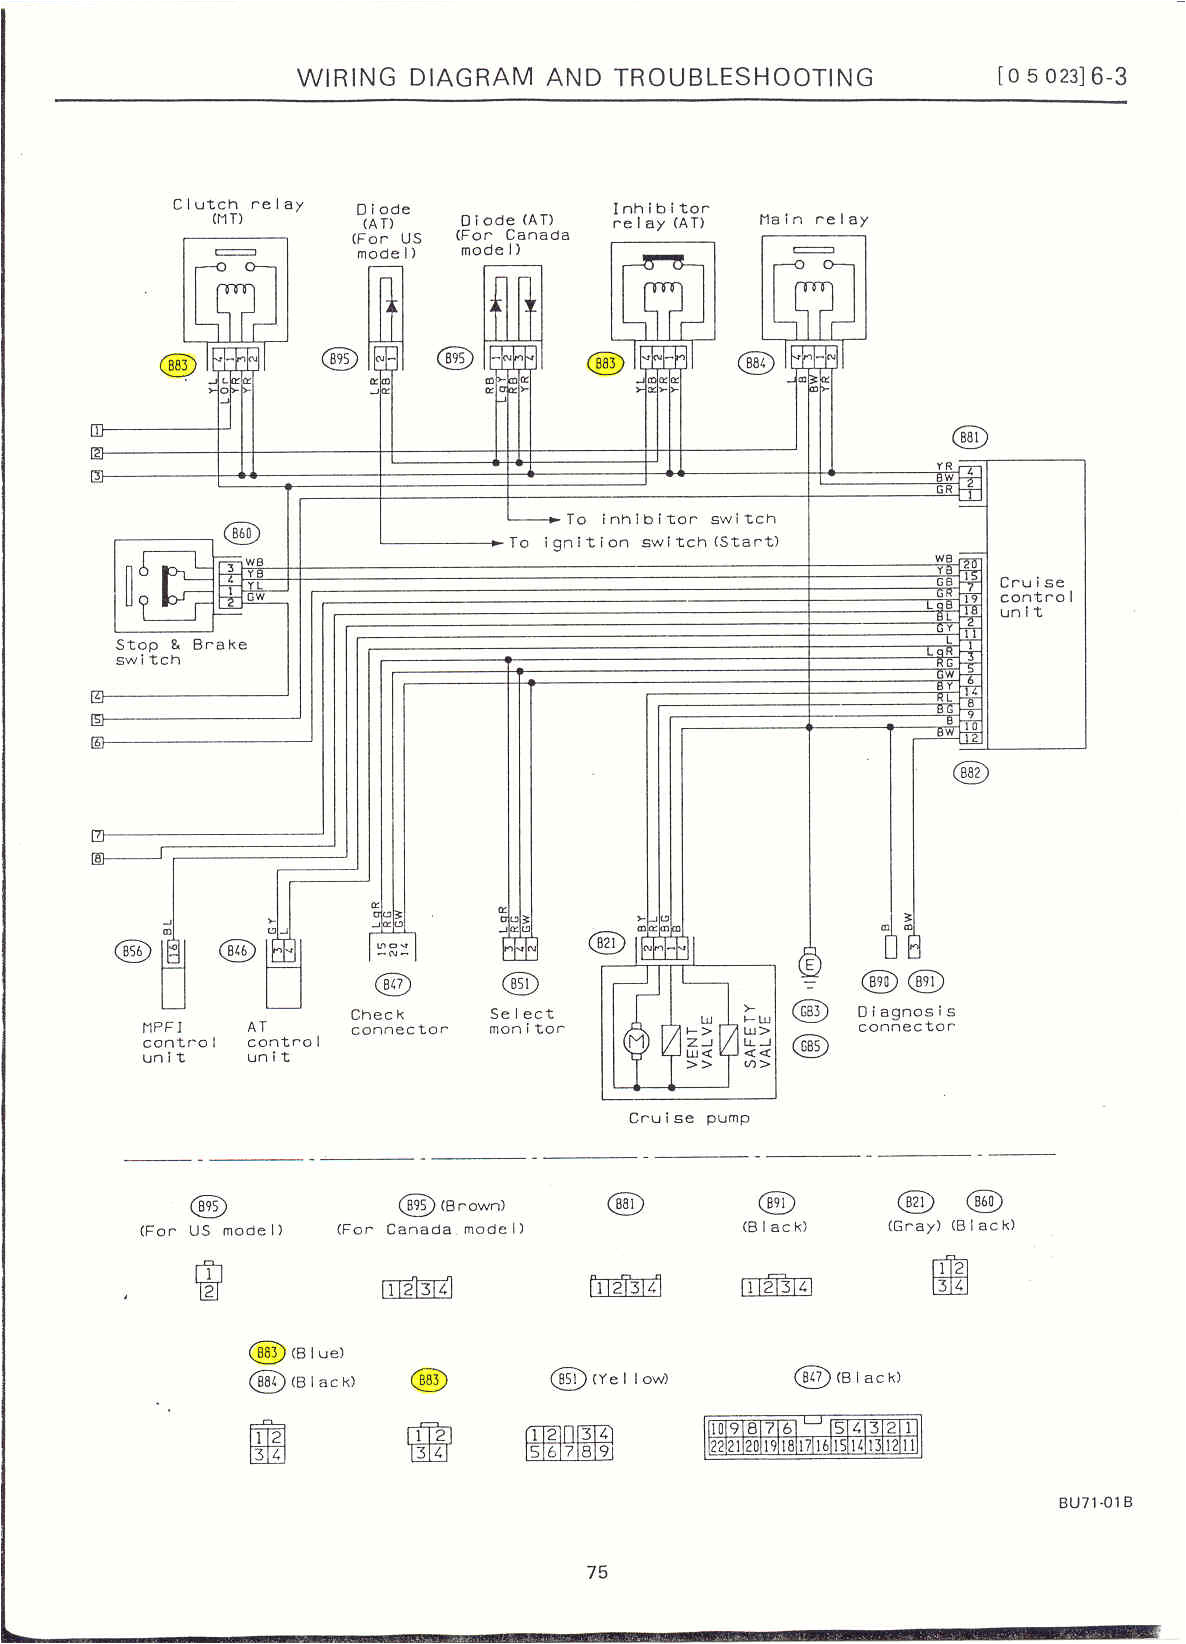 fuse diagram for 1997 subaru schema wiring diagram